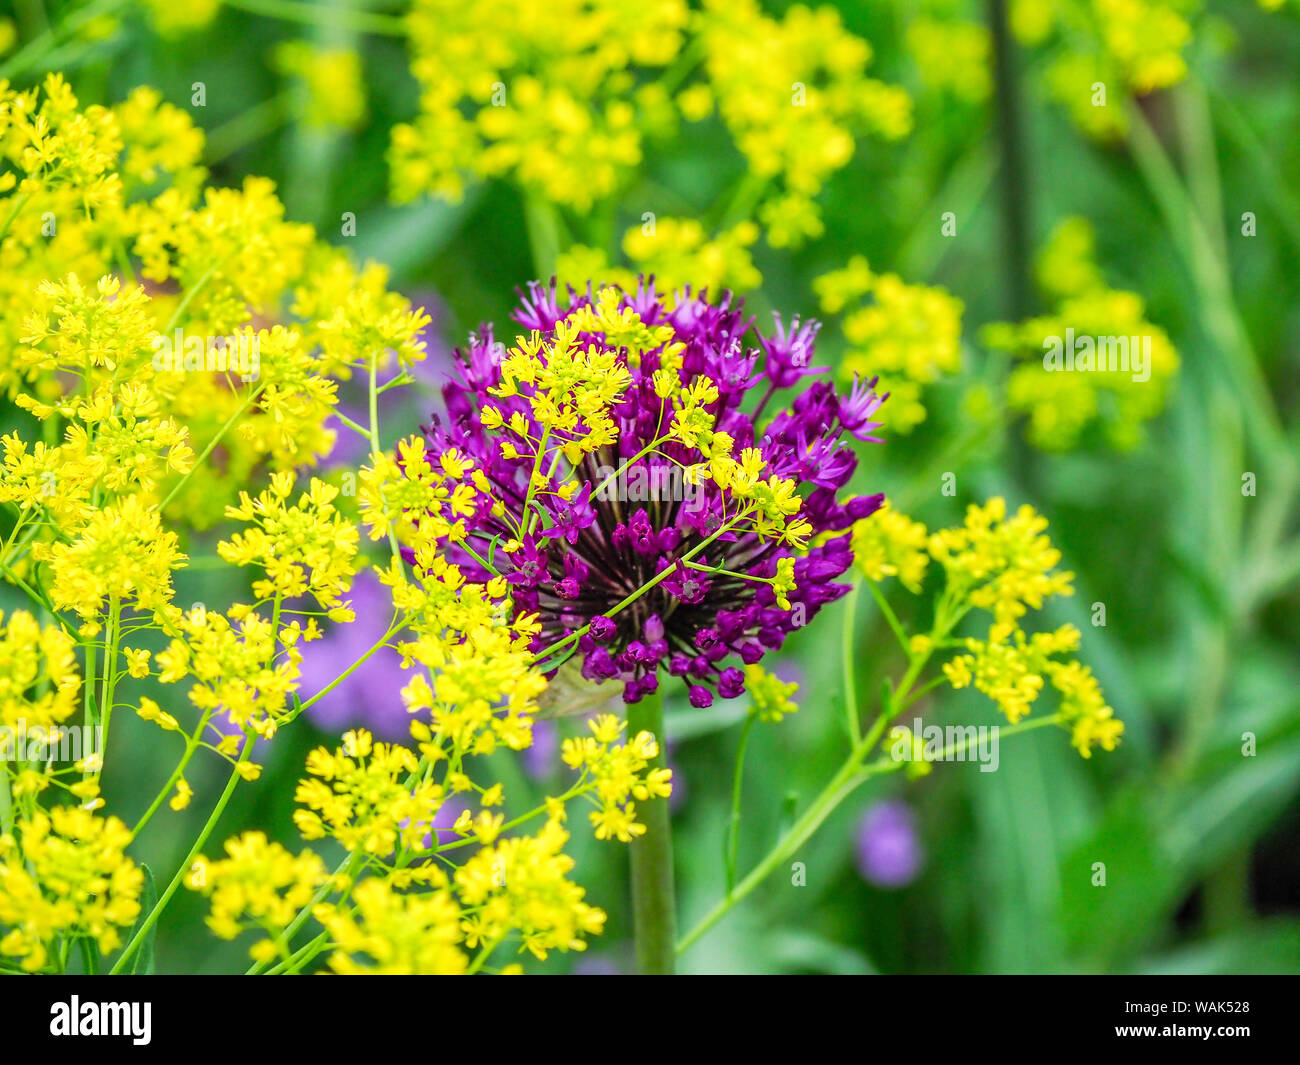 Purple allium blooming amongst yellow flowering plants. Stock Photo